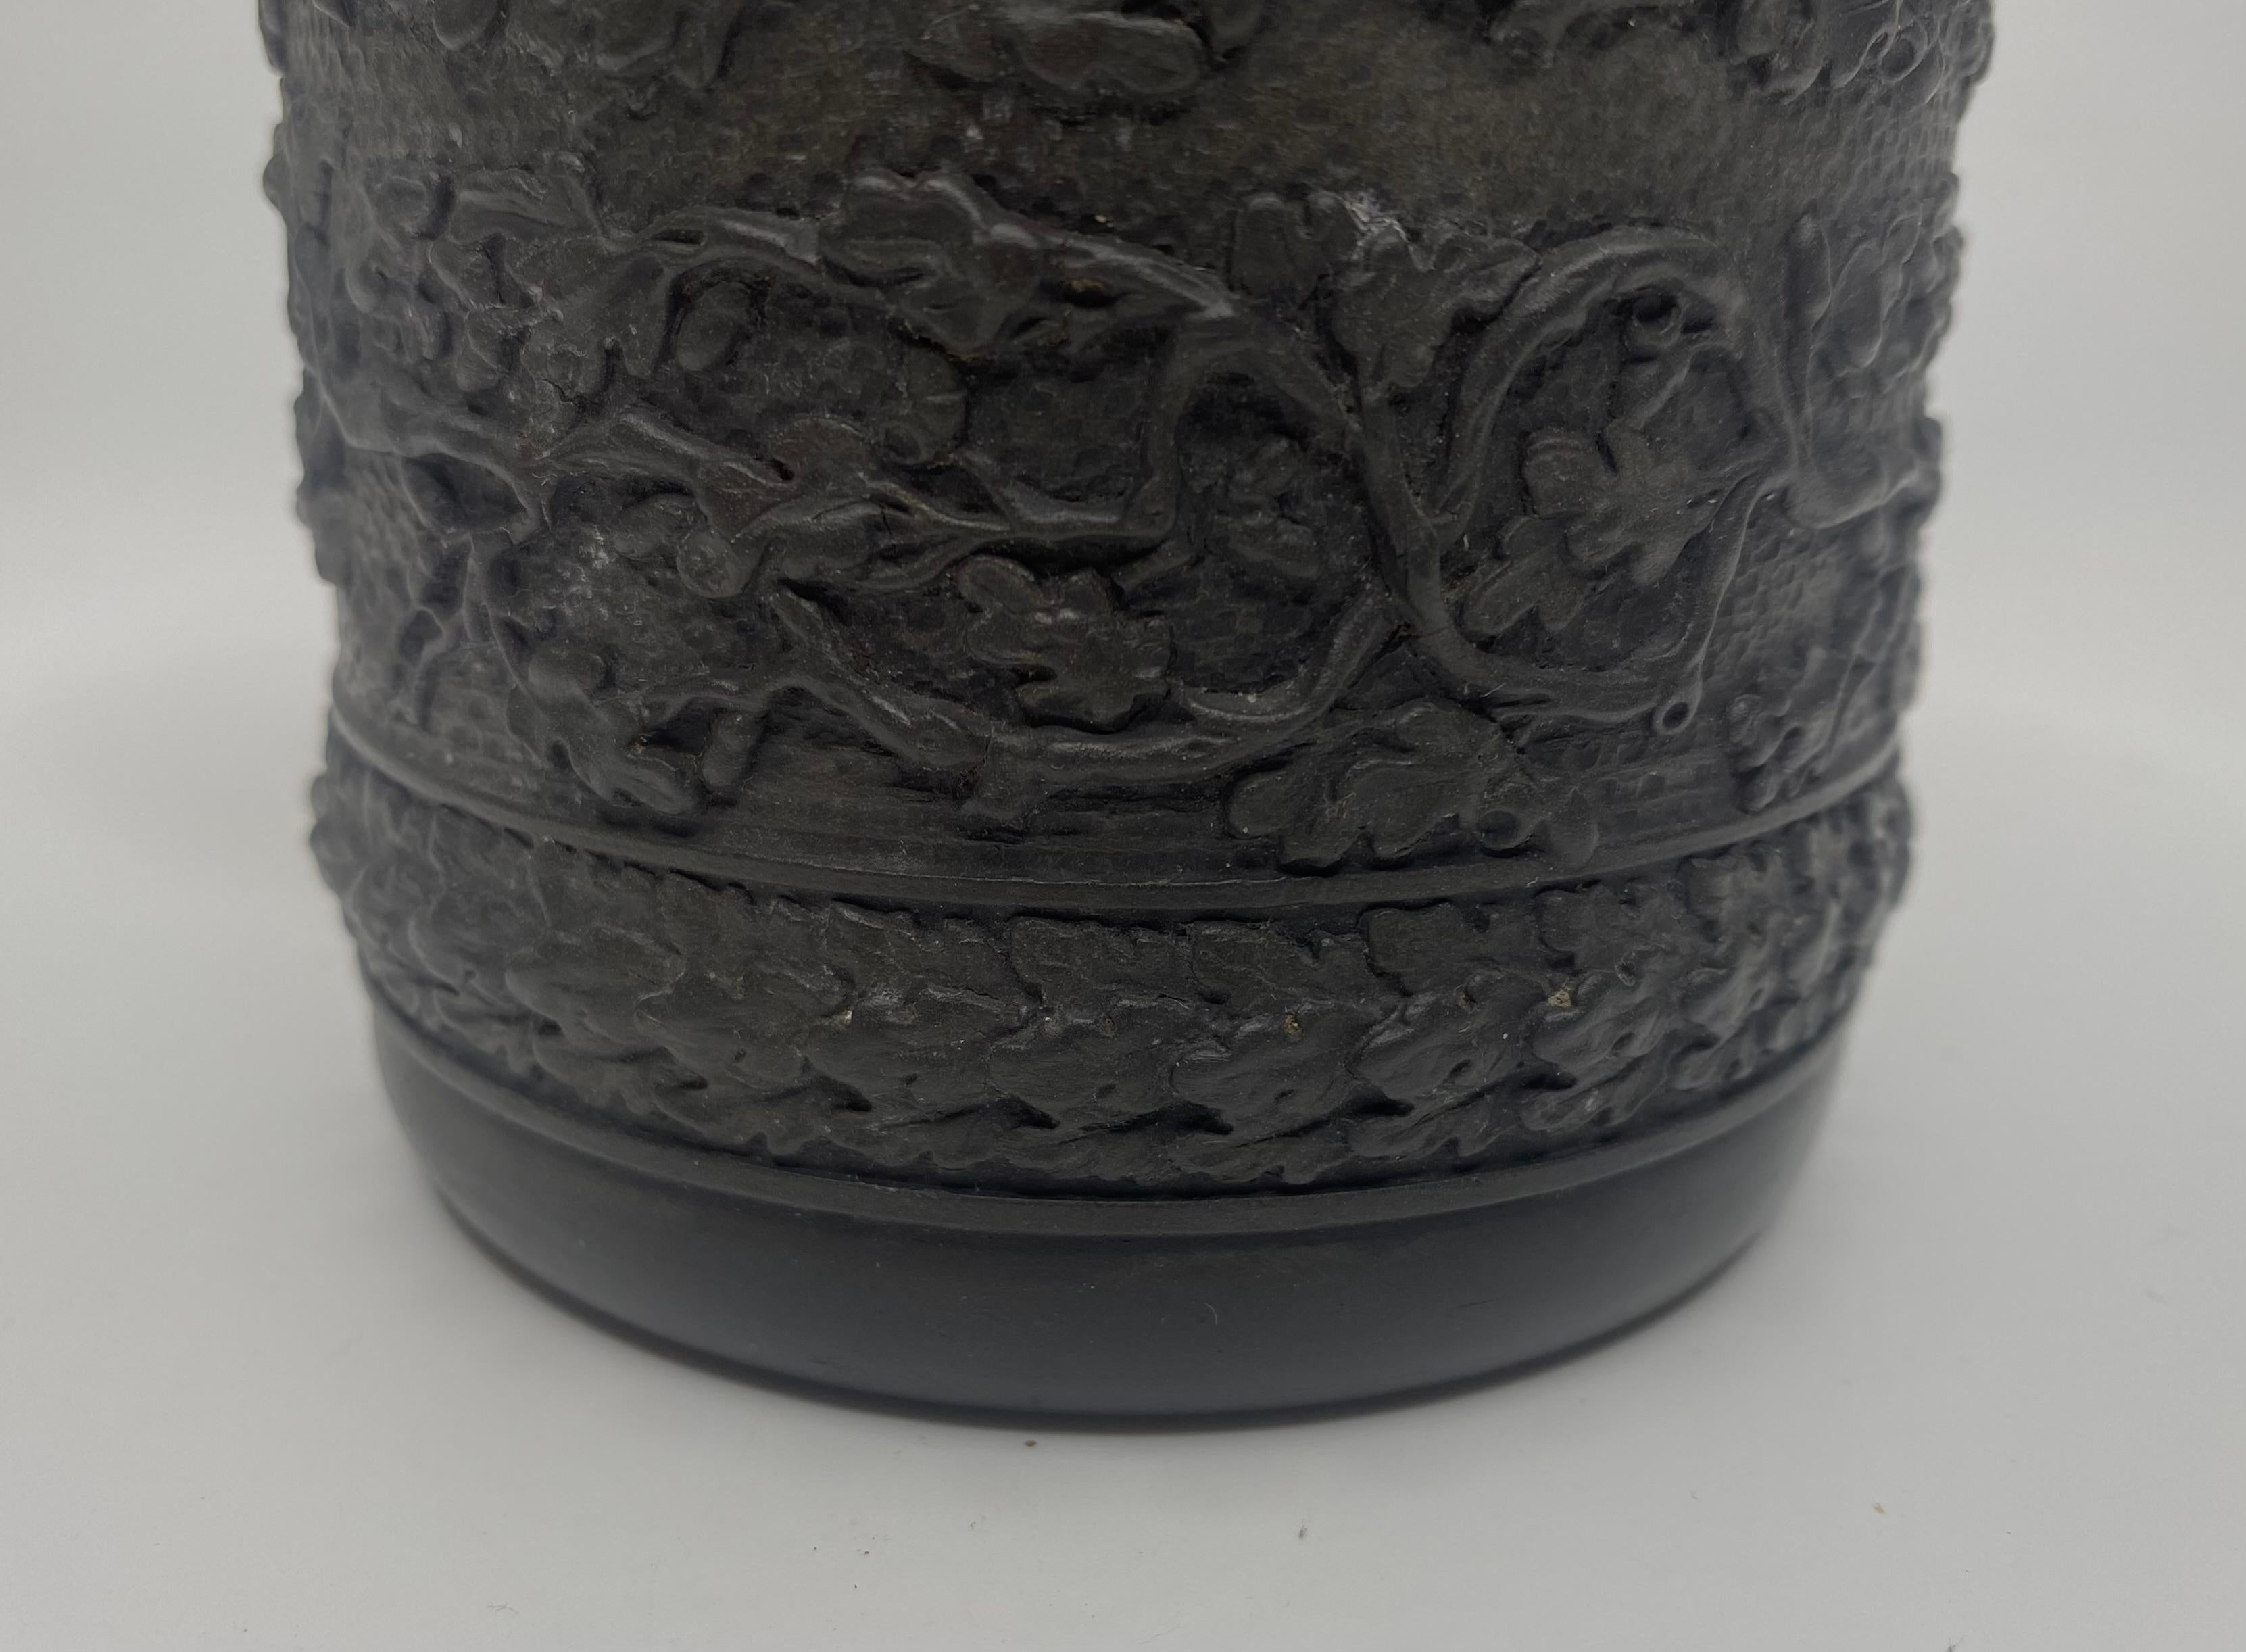 Early 19th Century Wedgwood black basalt mug, silver mounted, 1808.